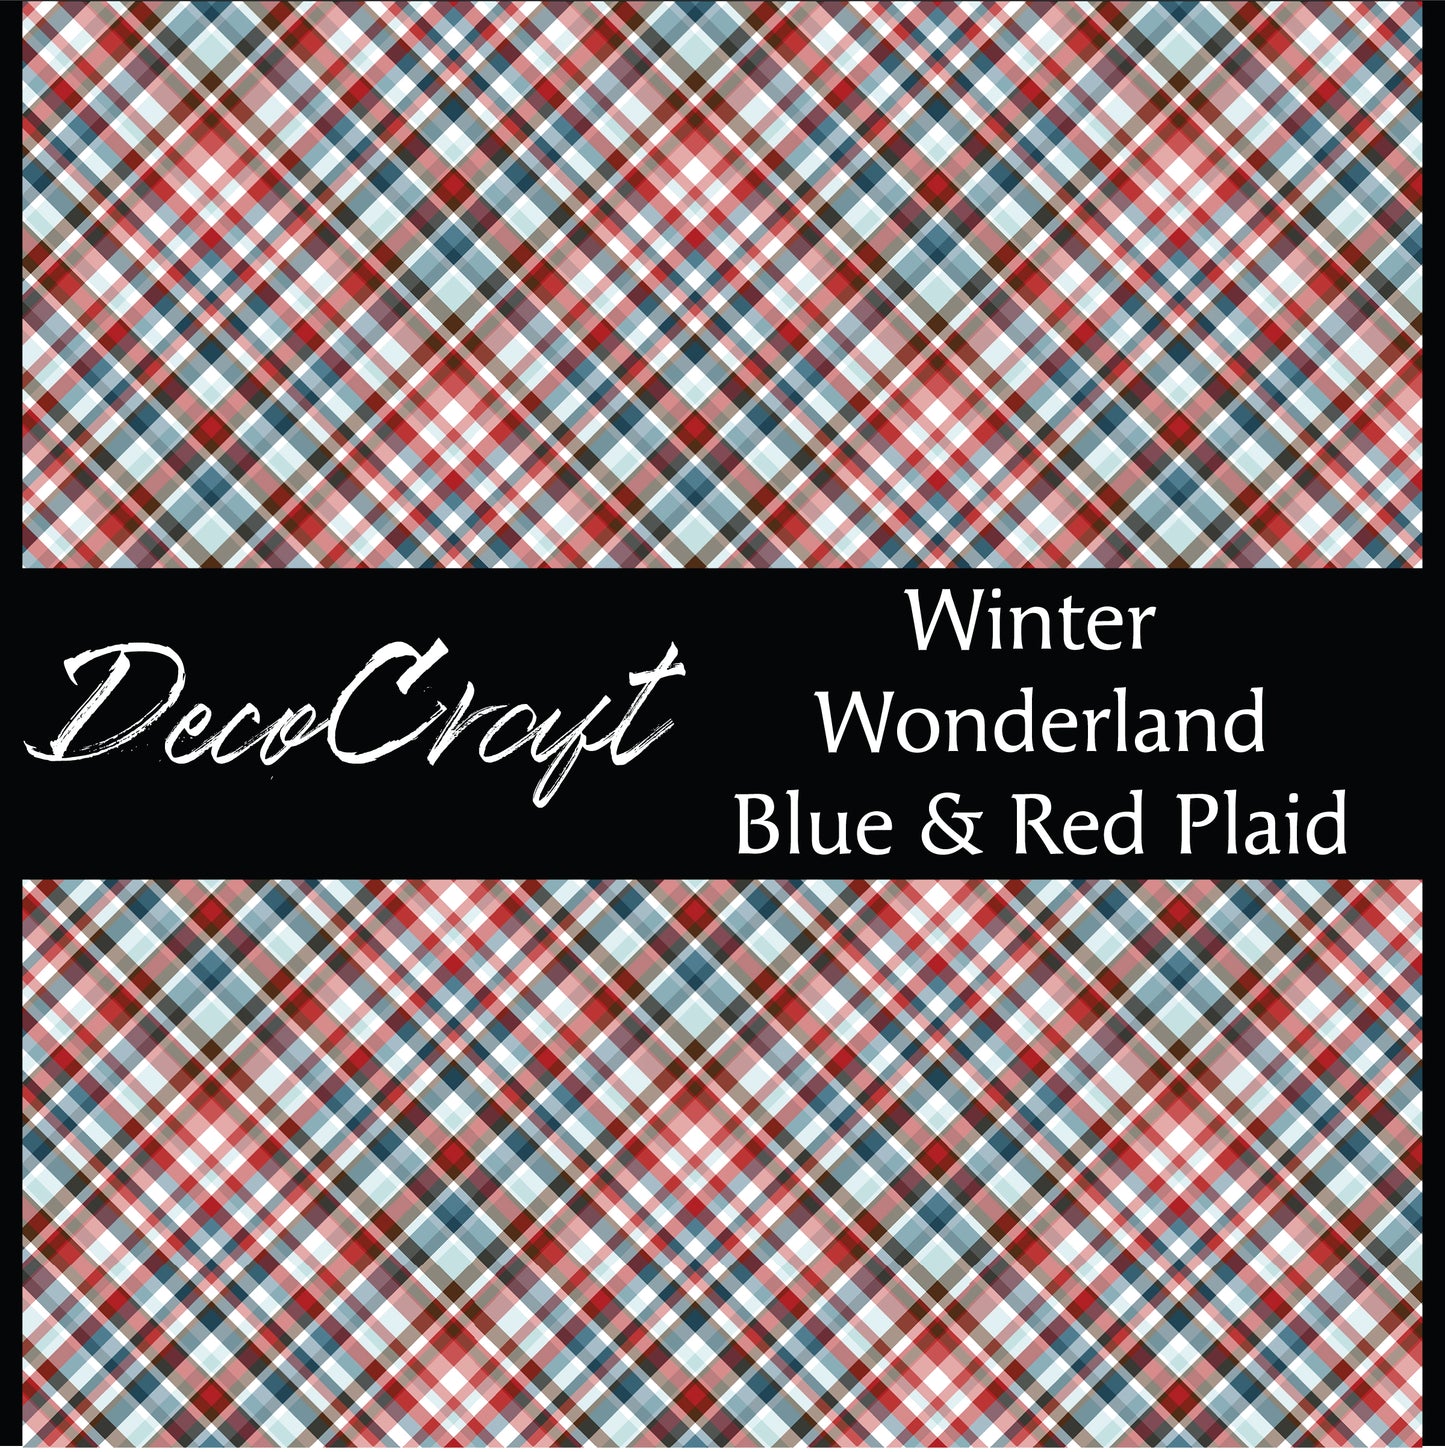 DecoCraft - Christmas - Plaid - Winter Wonderland - Red and Blue Plaid